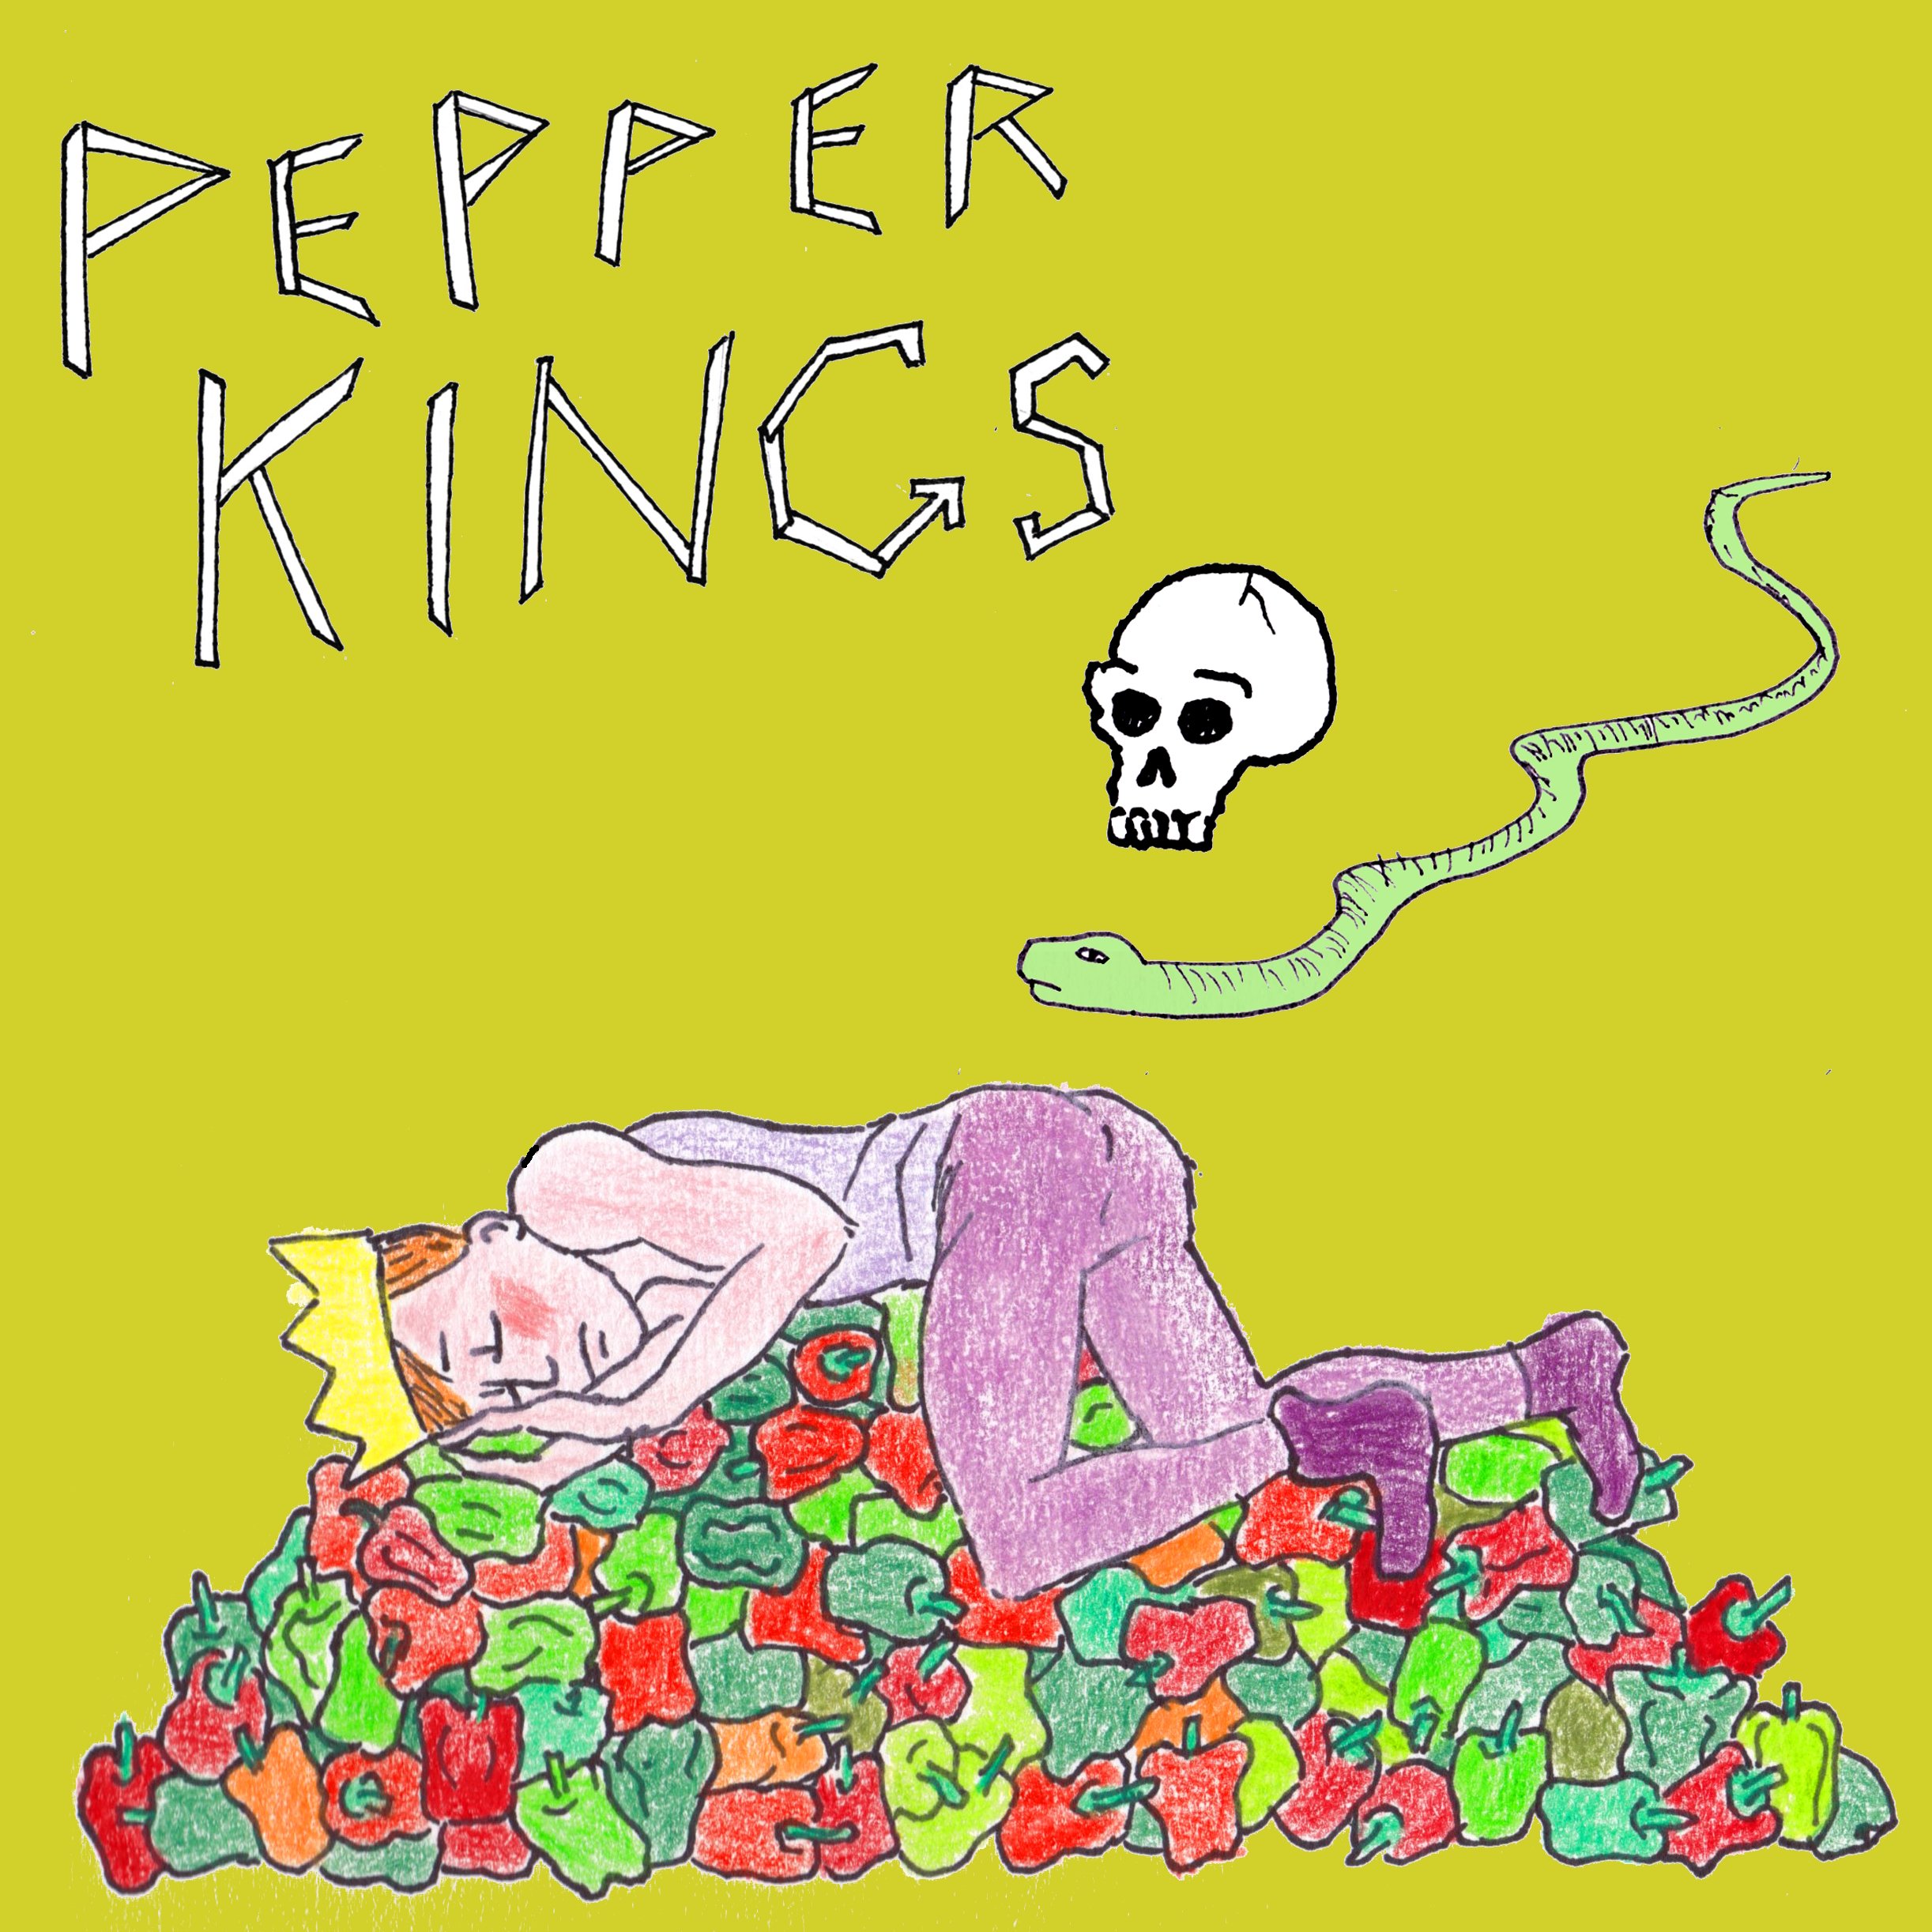 TAR021 Pepper Kings.jpeg